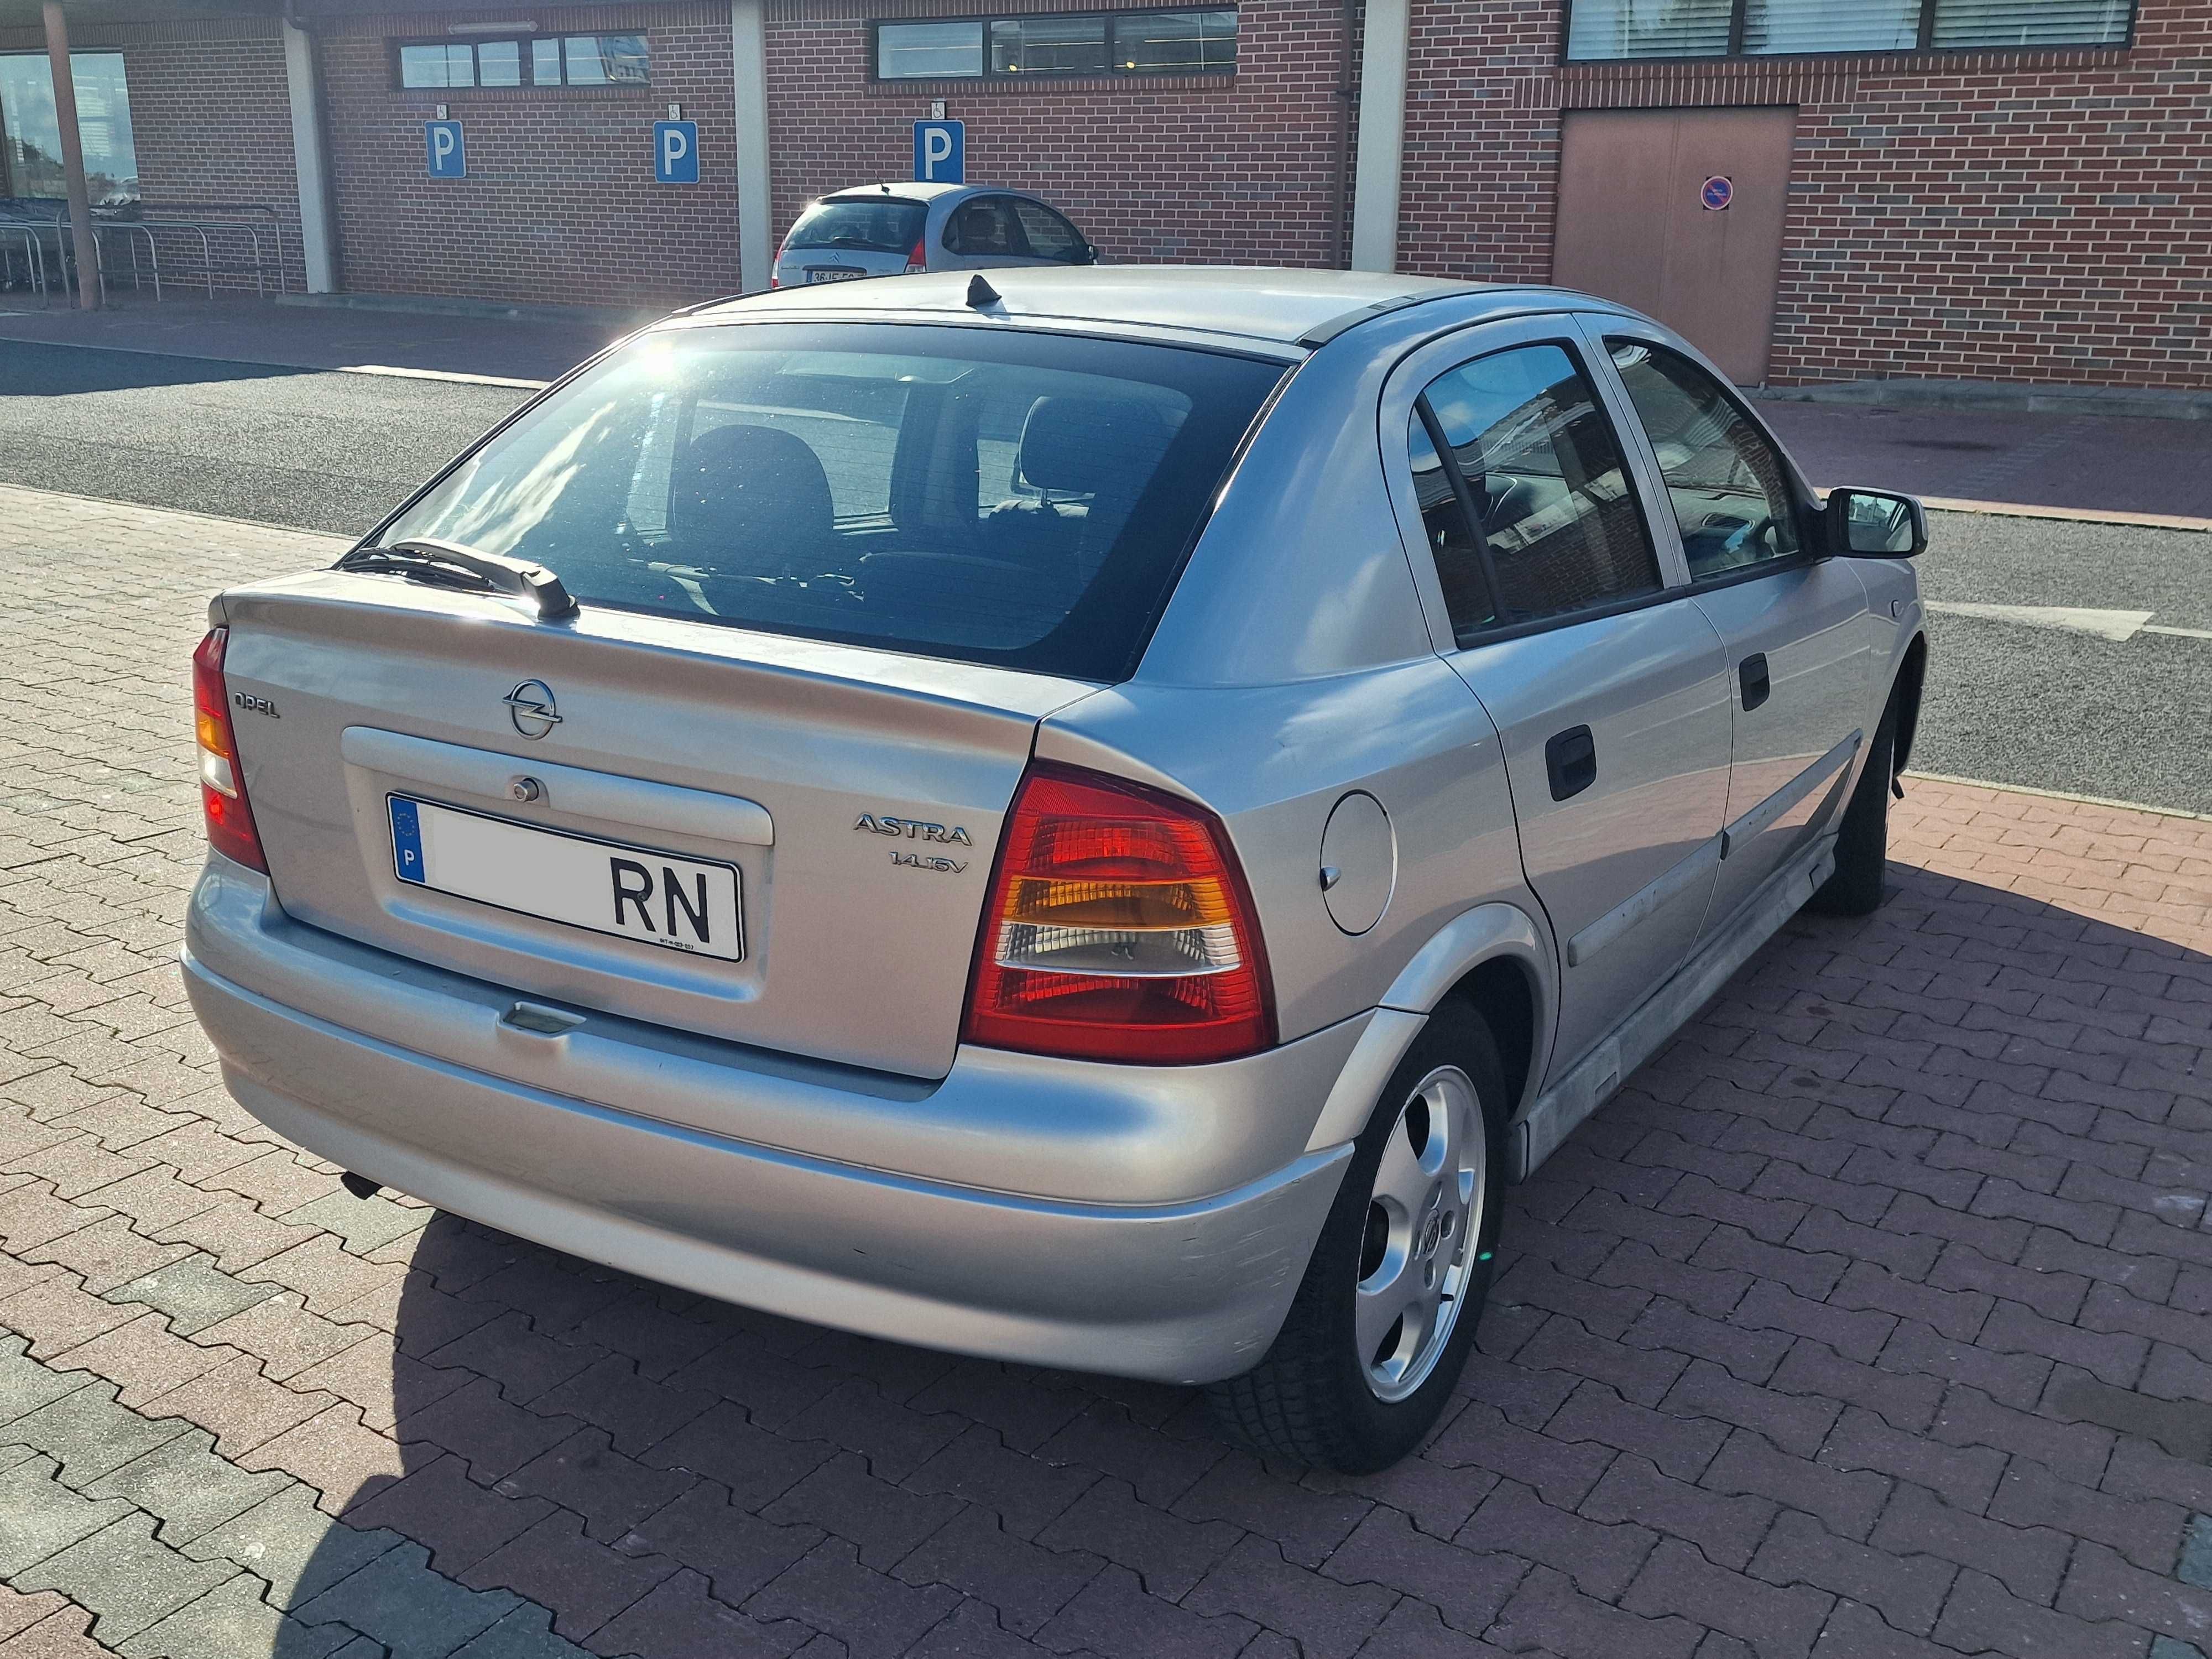 Opel Astra G 1.4 Club 16V 90cv - Ano 2001